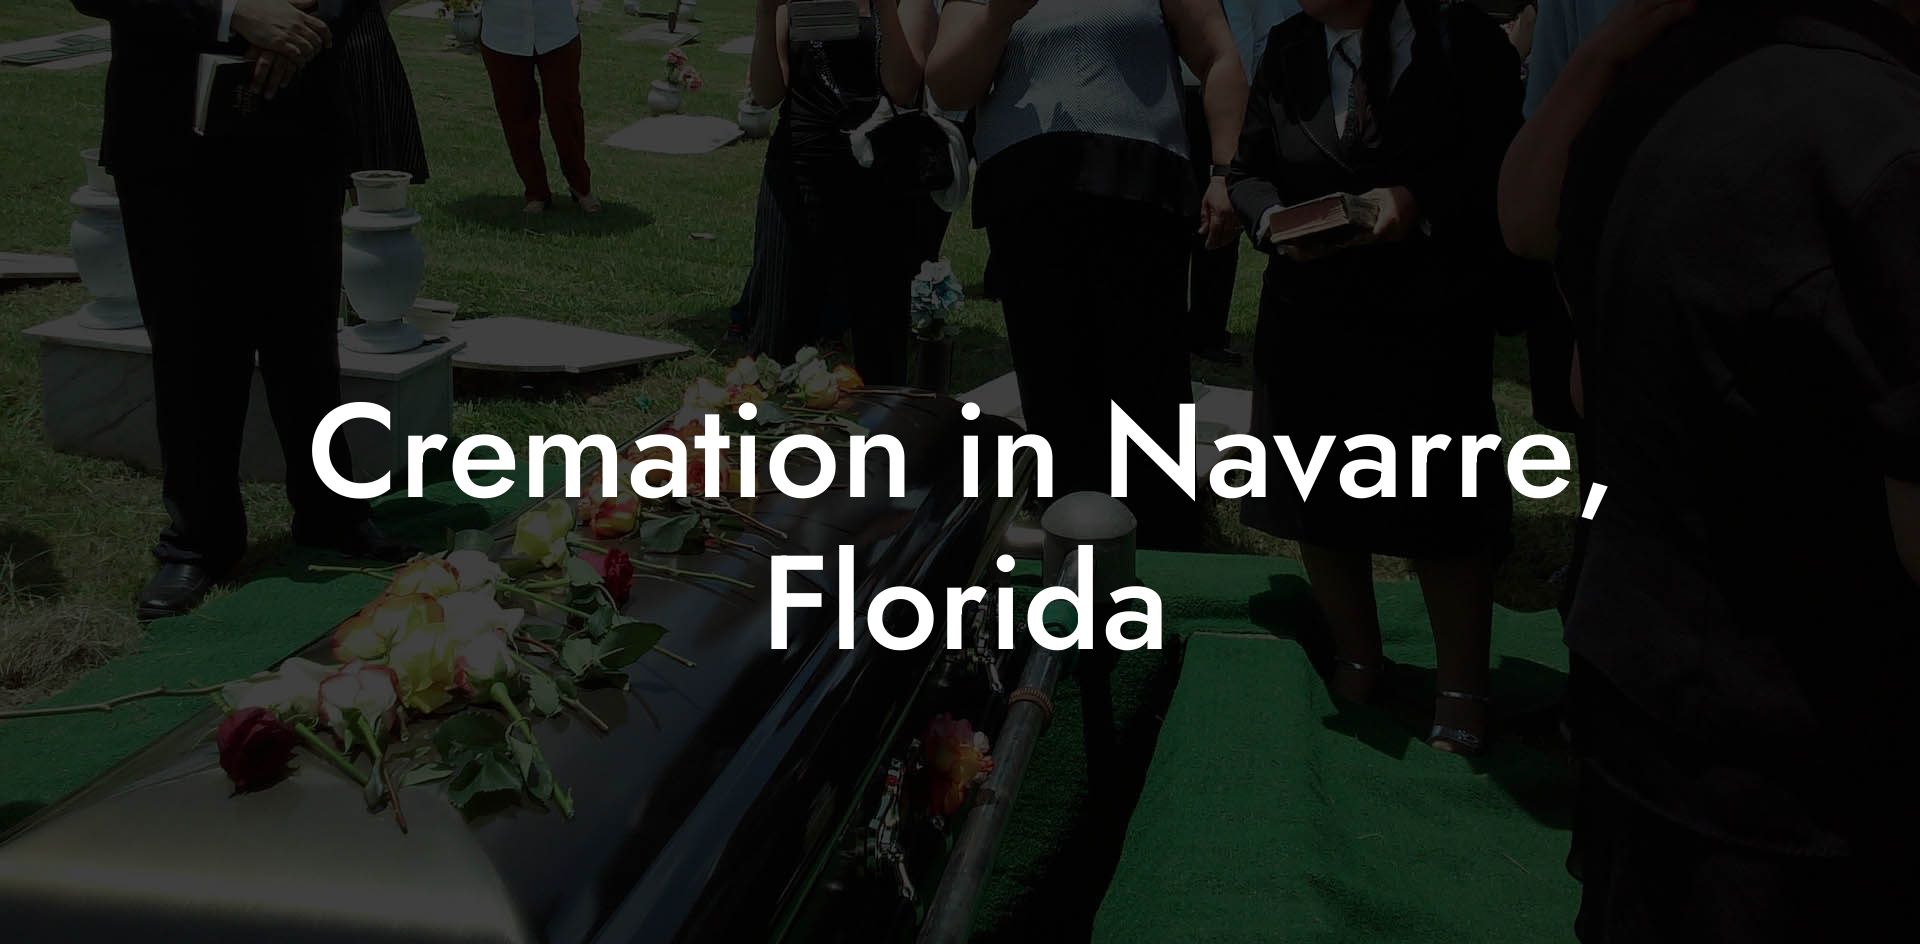 Cremation in Navarre, Florida